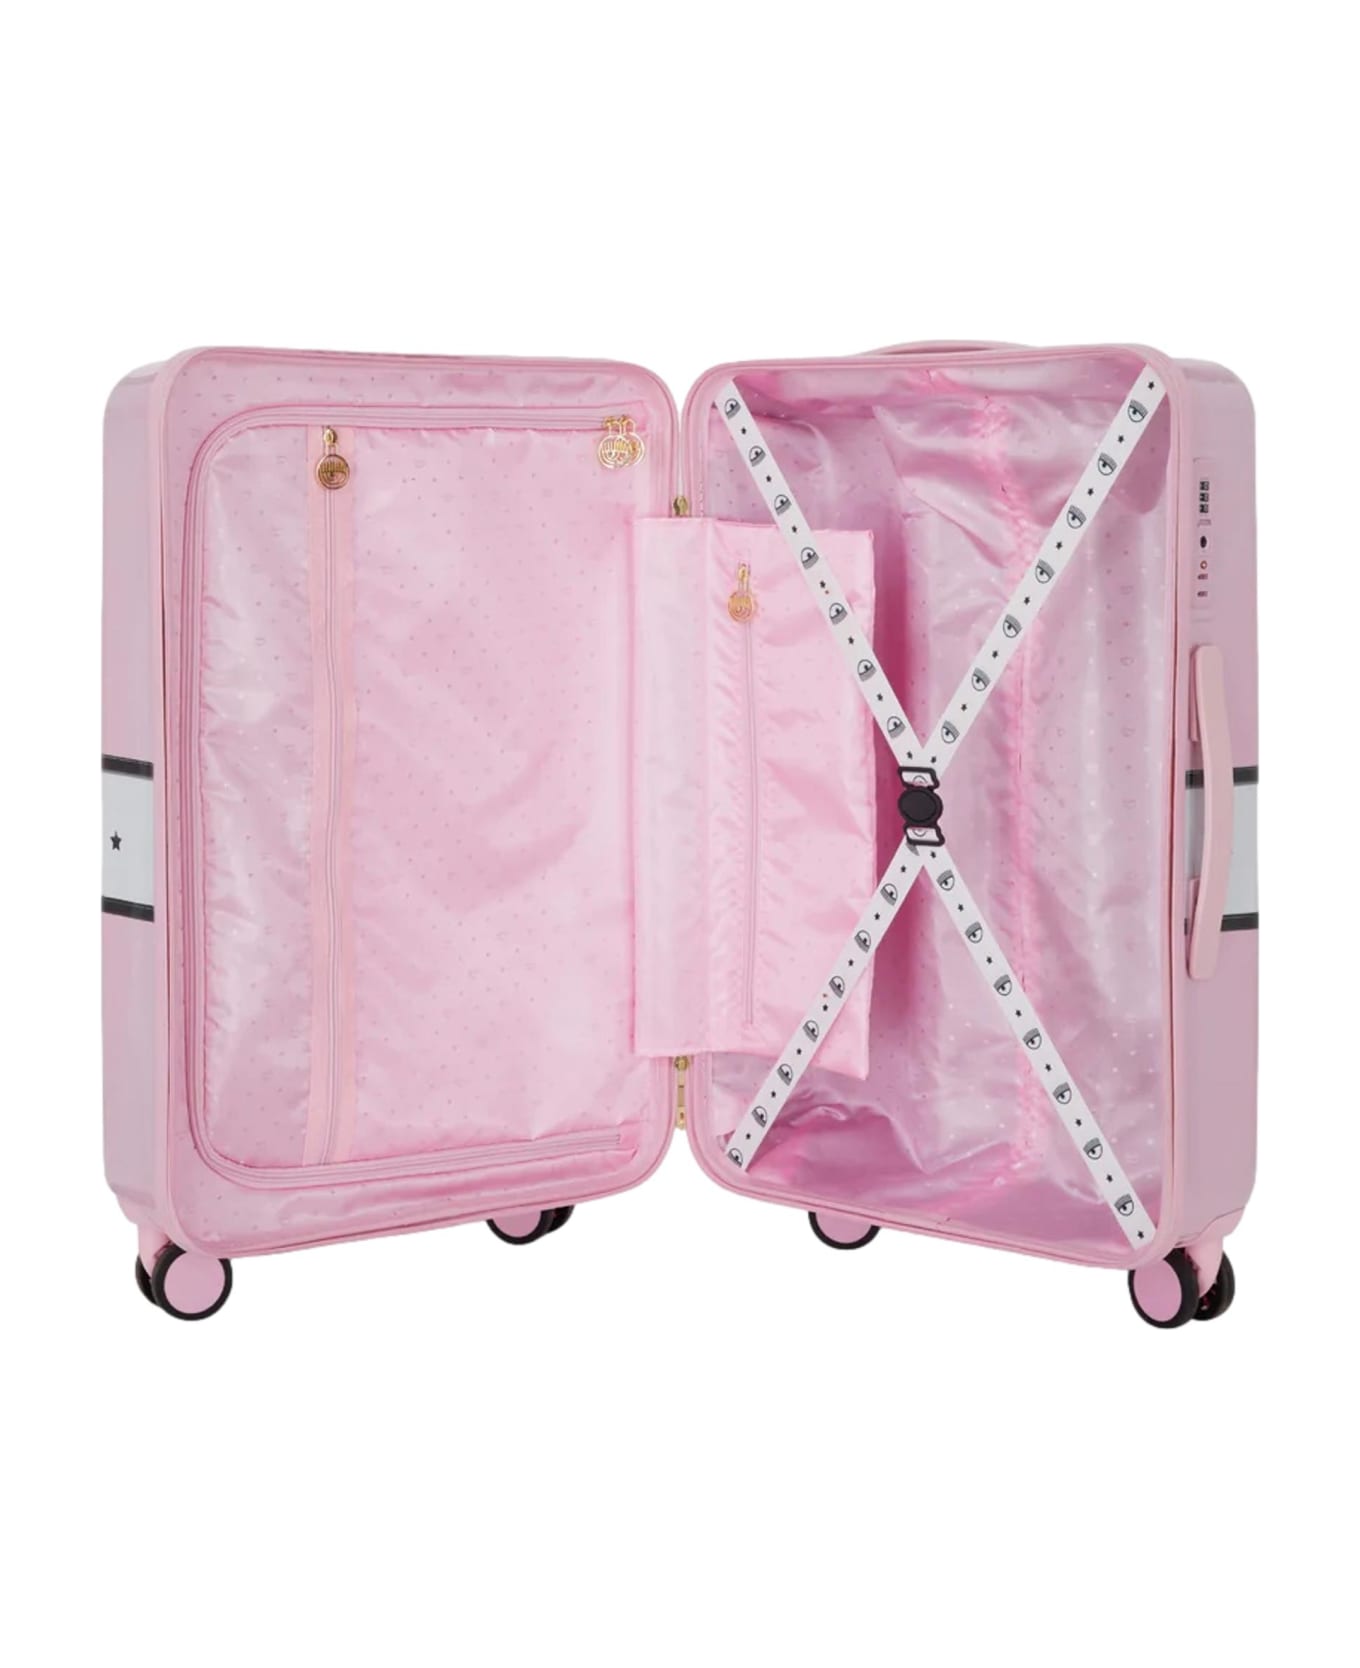 Chiara Ferragni Suitcases Pink - Pink